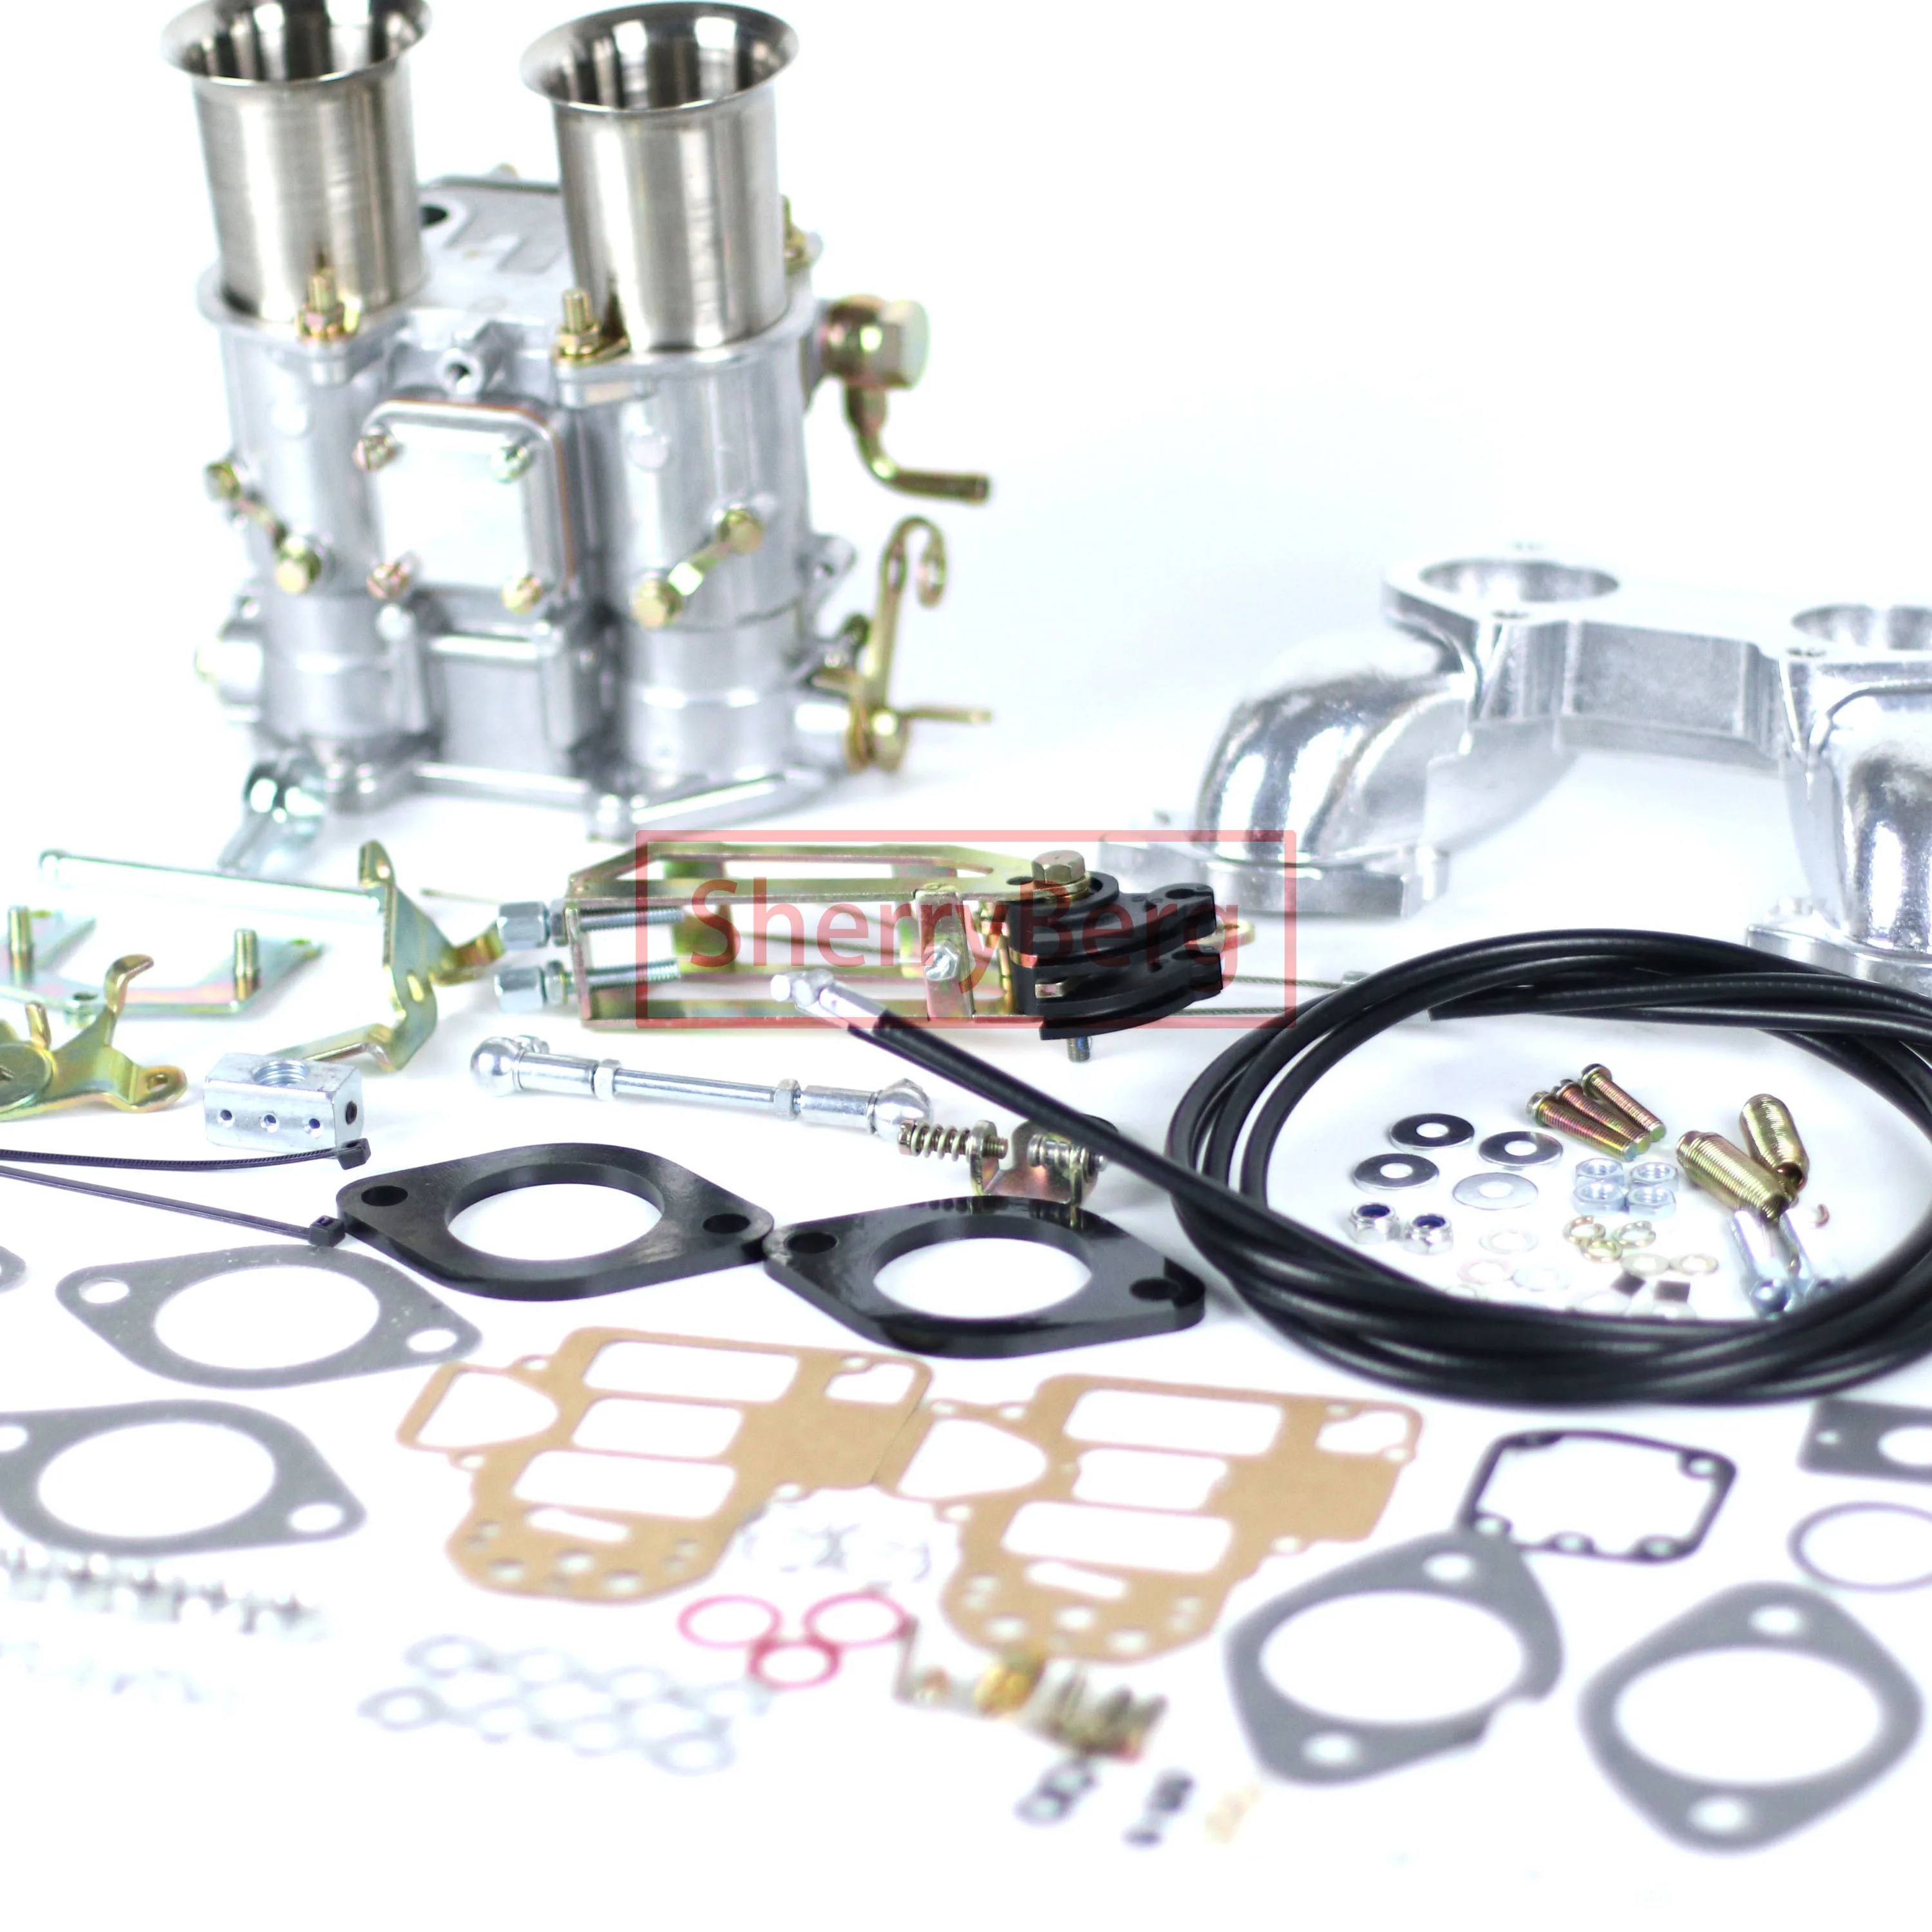 

SherryBer Carb MANIFOLD Linkage 45dcoe 45mm DCOE Carburetor Conversion Kit for MINI COOPER WEBER/DELLORTO EMPI 45 DCOE/DHLA New